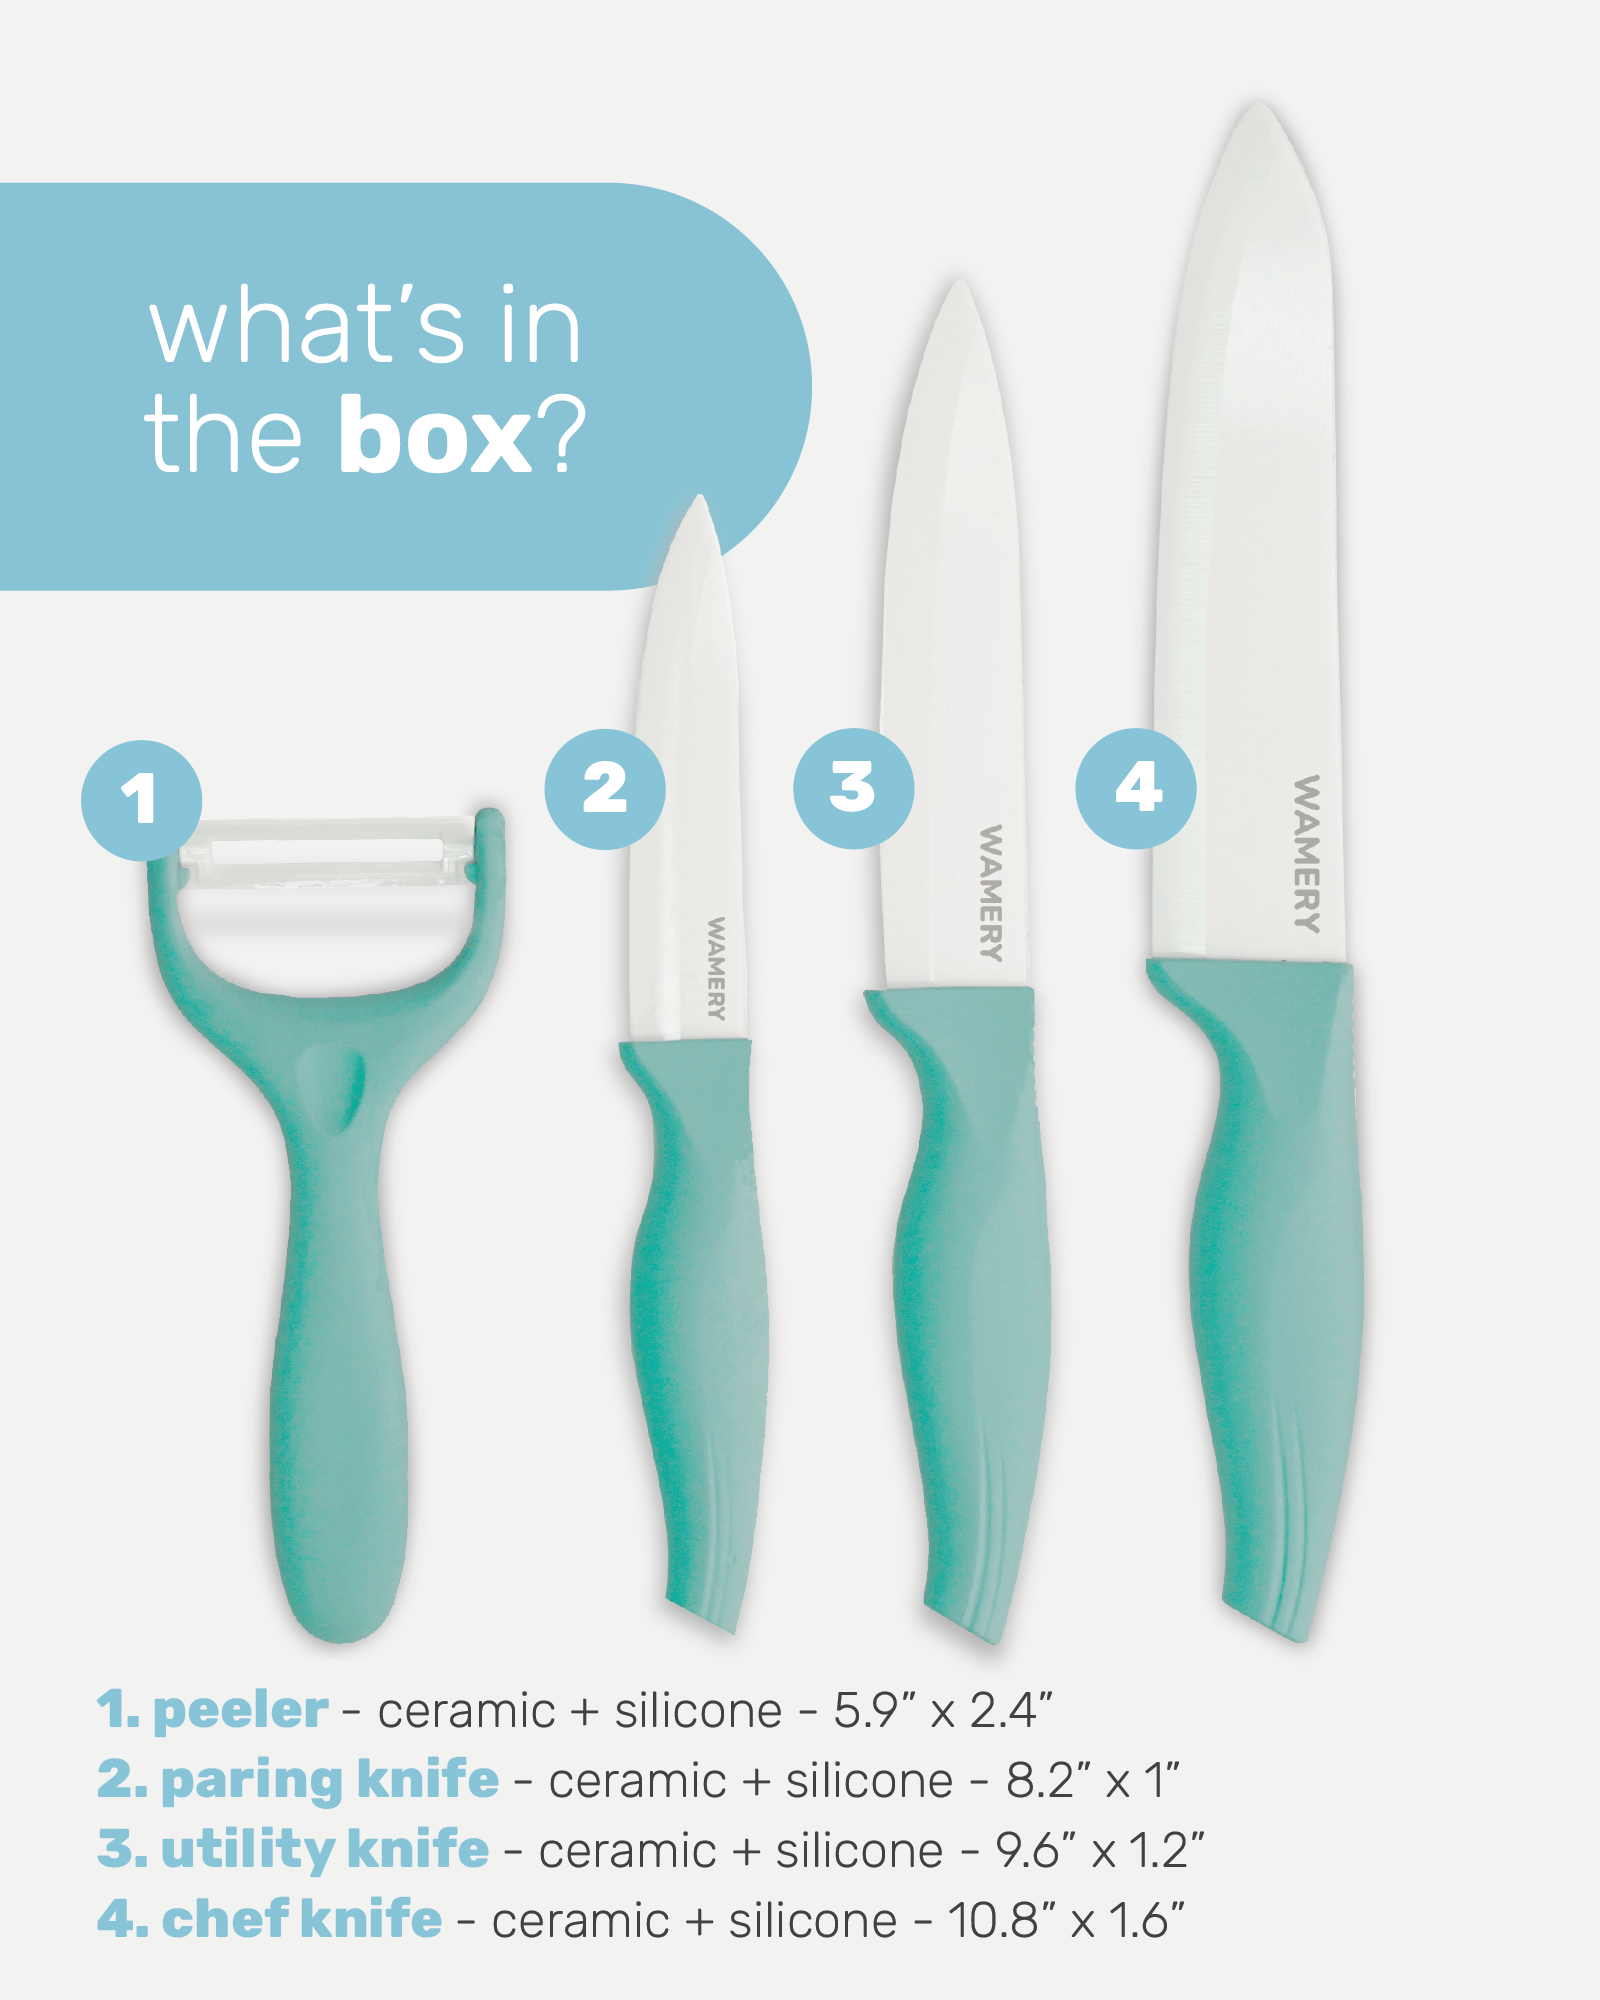 Farberware 6 In. Ceramic Chef Knife, Aqua, Cutlery, Household